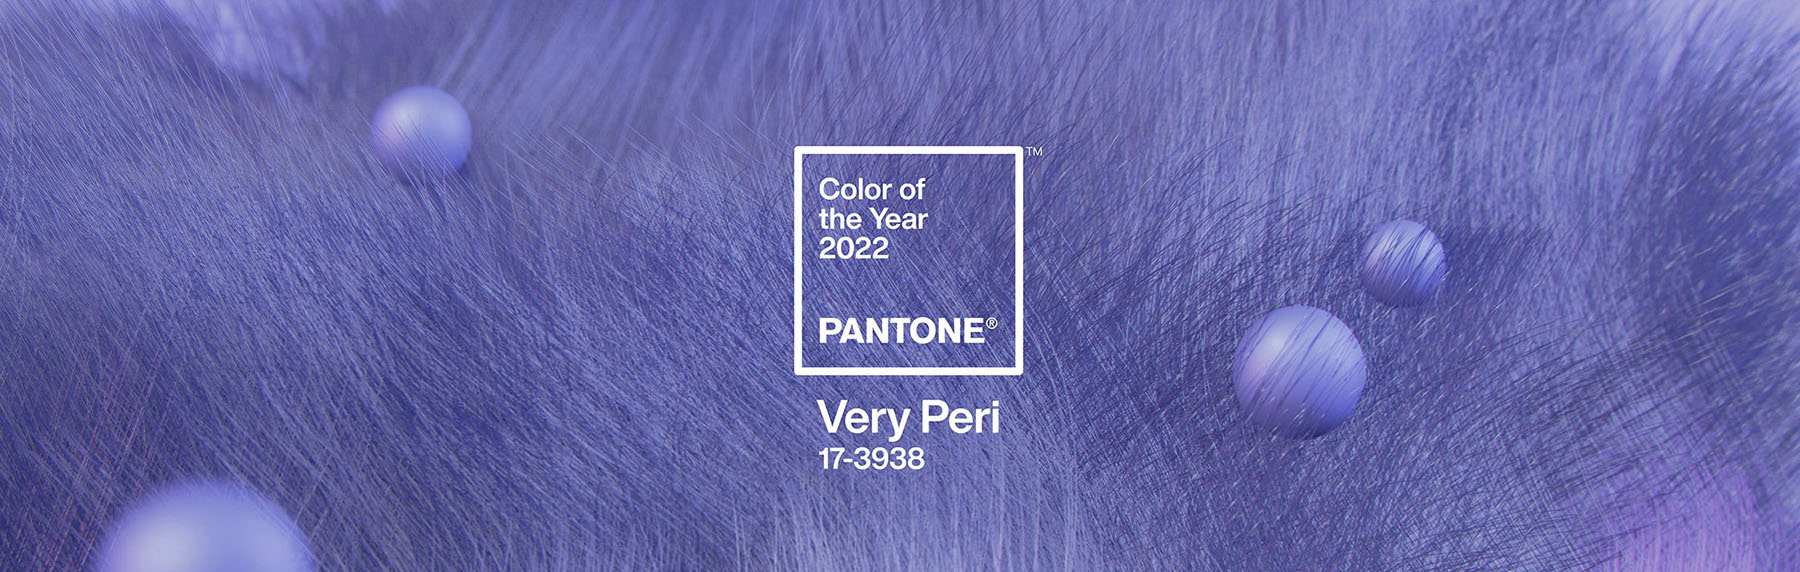 pantone-color-of-the-year-2022-very-peri